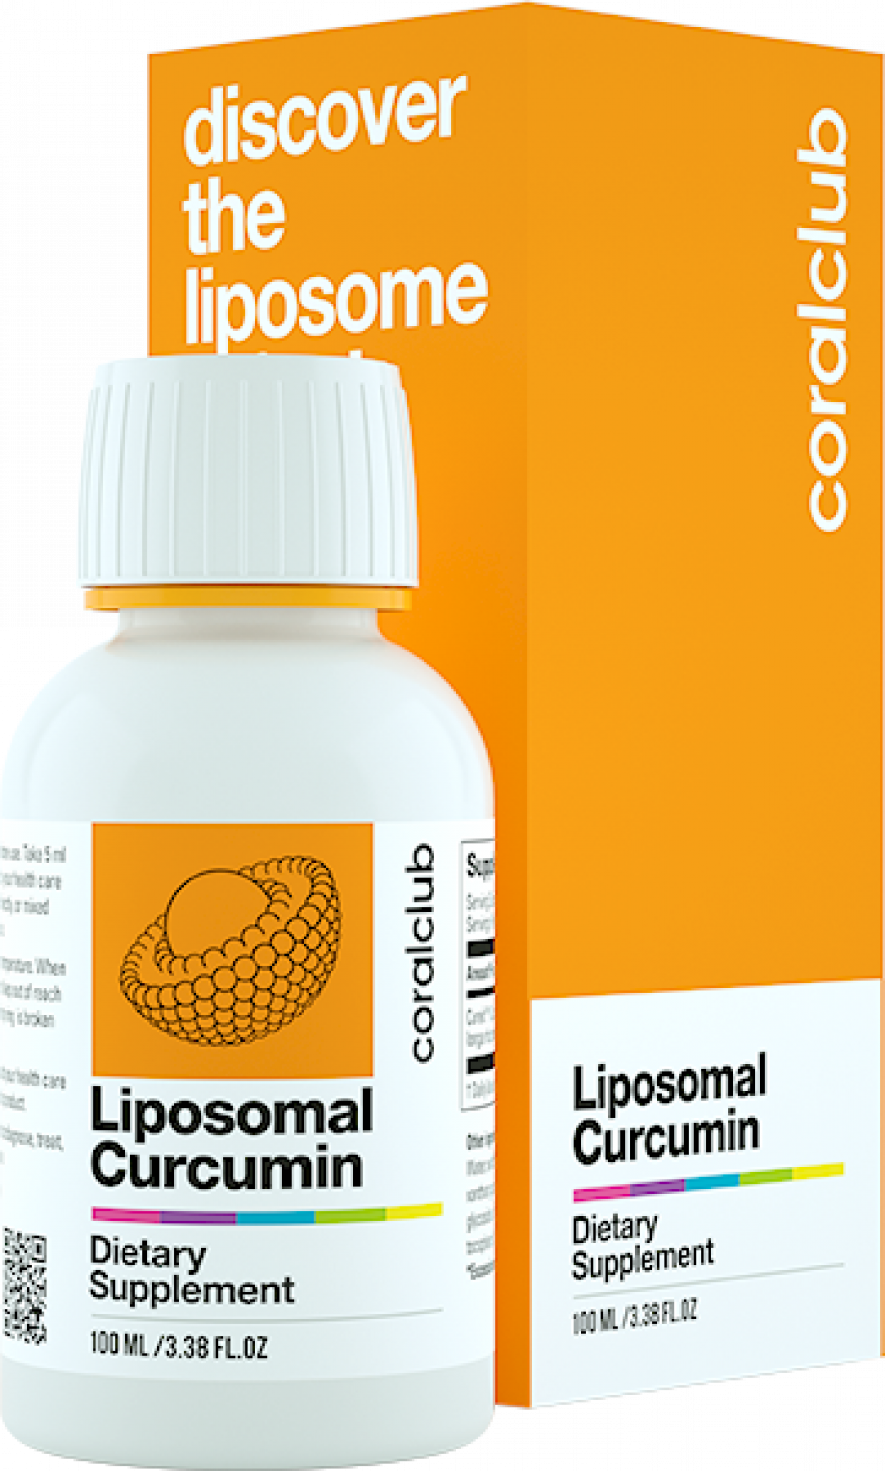 Liposomal Curcumin, or Turmeric in all its glory